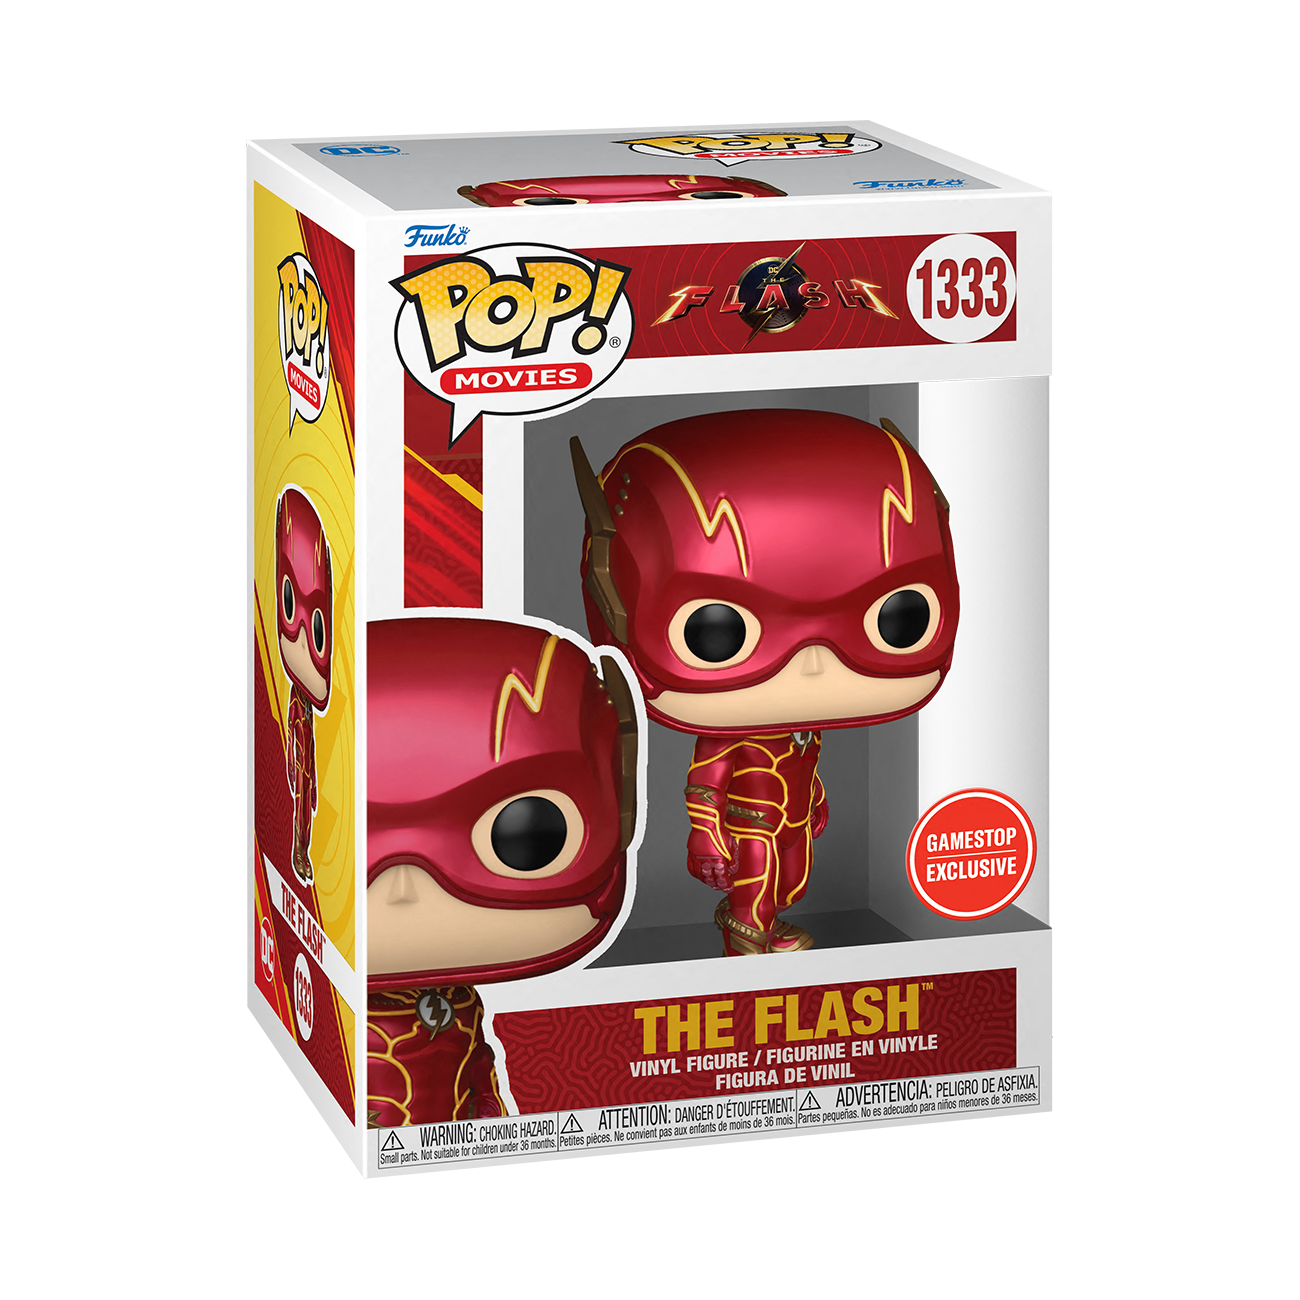 DC Shop: Funko Pop! Heroes: The Flash (Exclusive Diamond